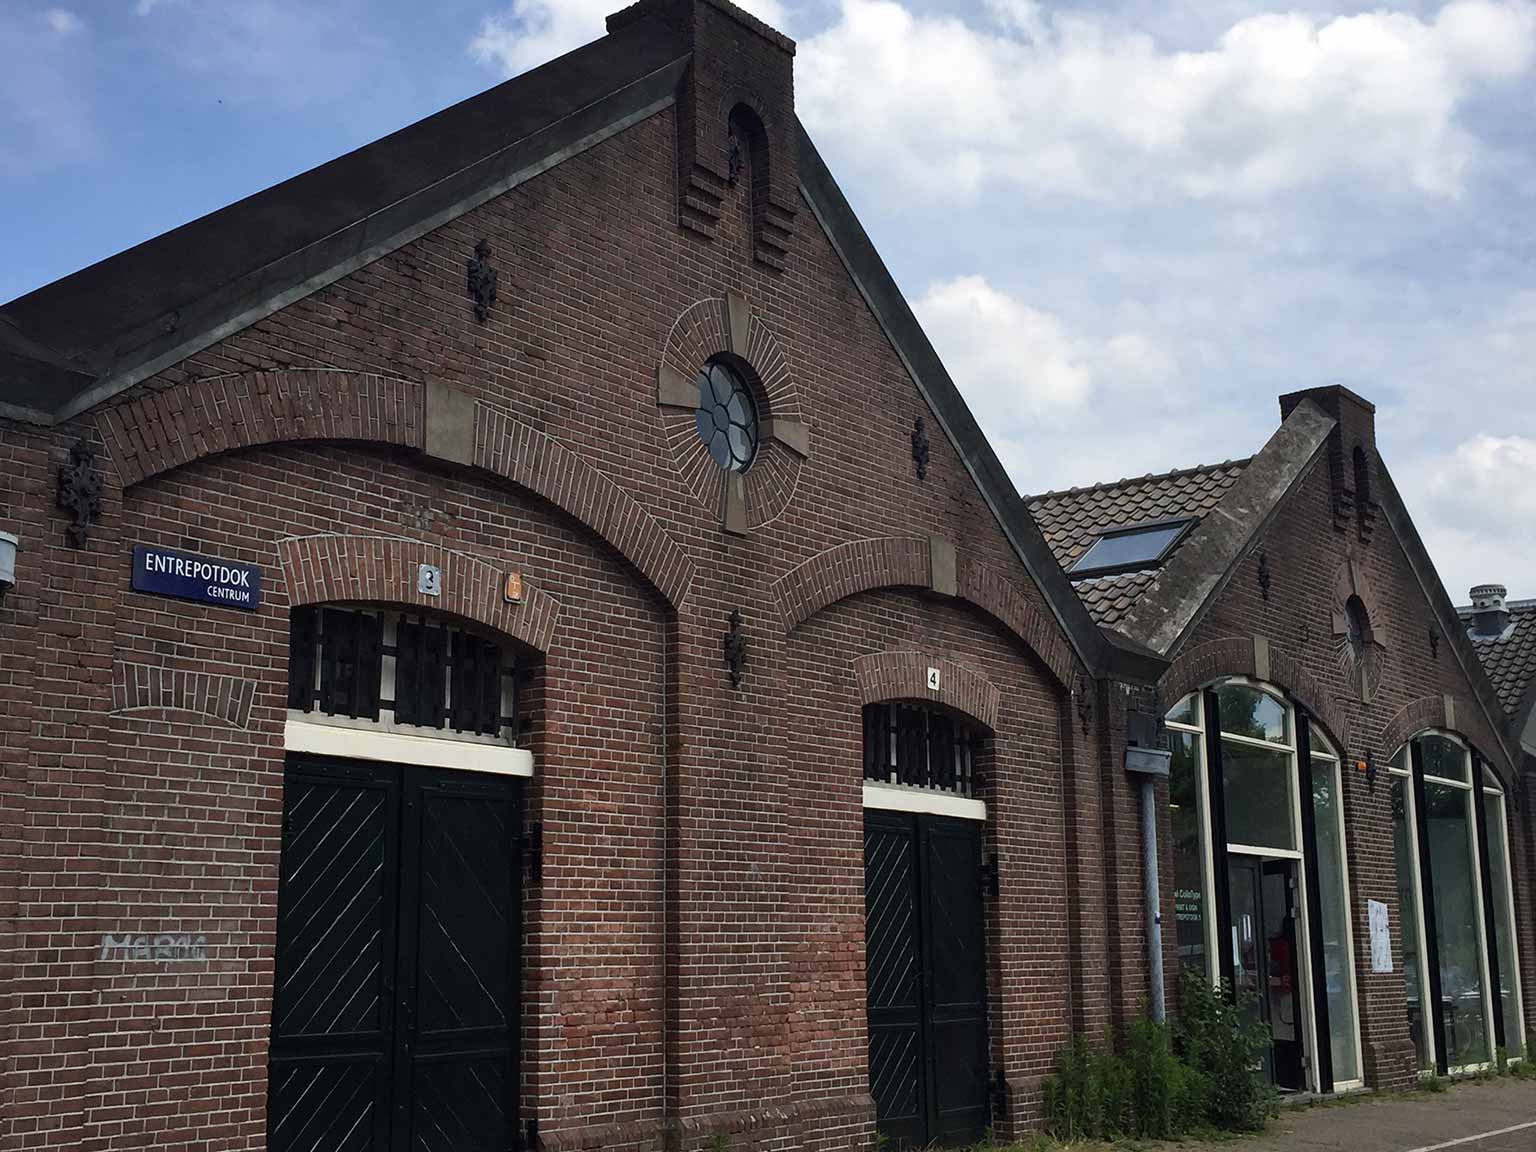 Lower storage building on the Entrepotdok, Amsterdam